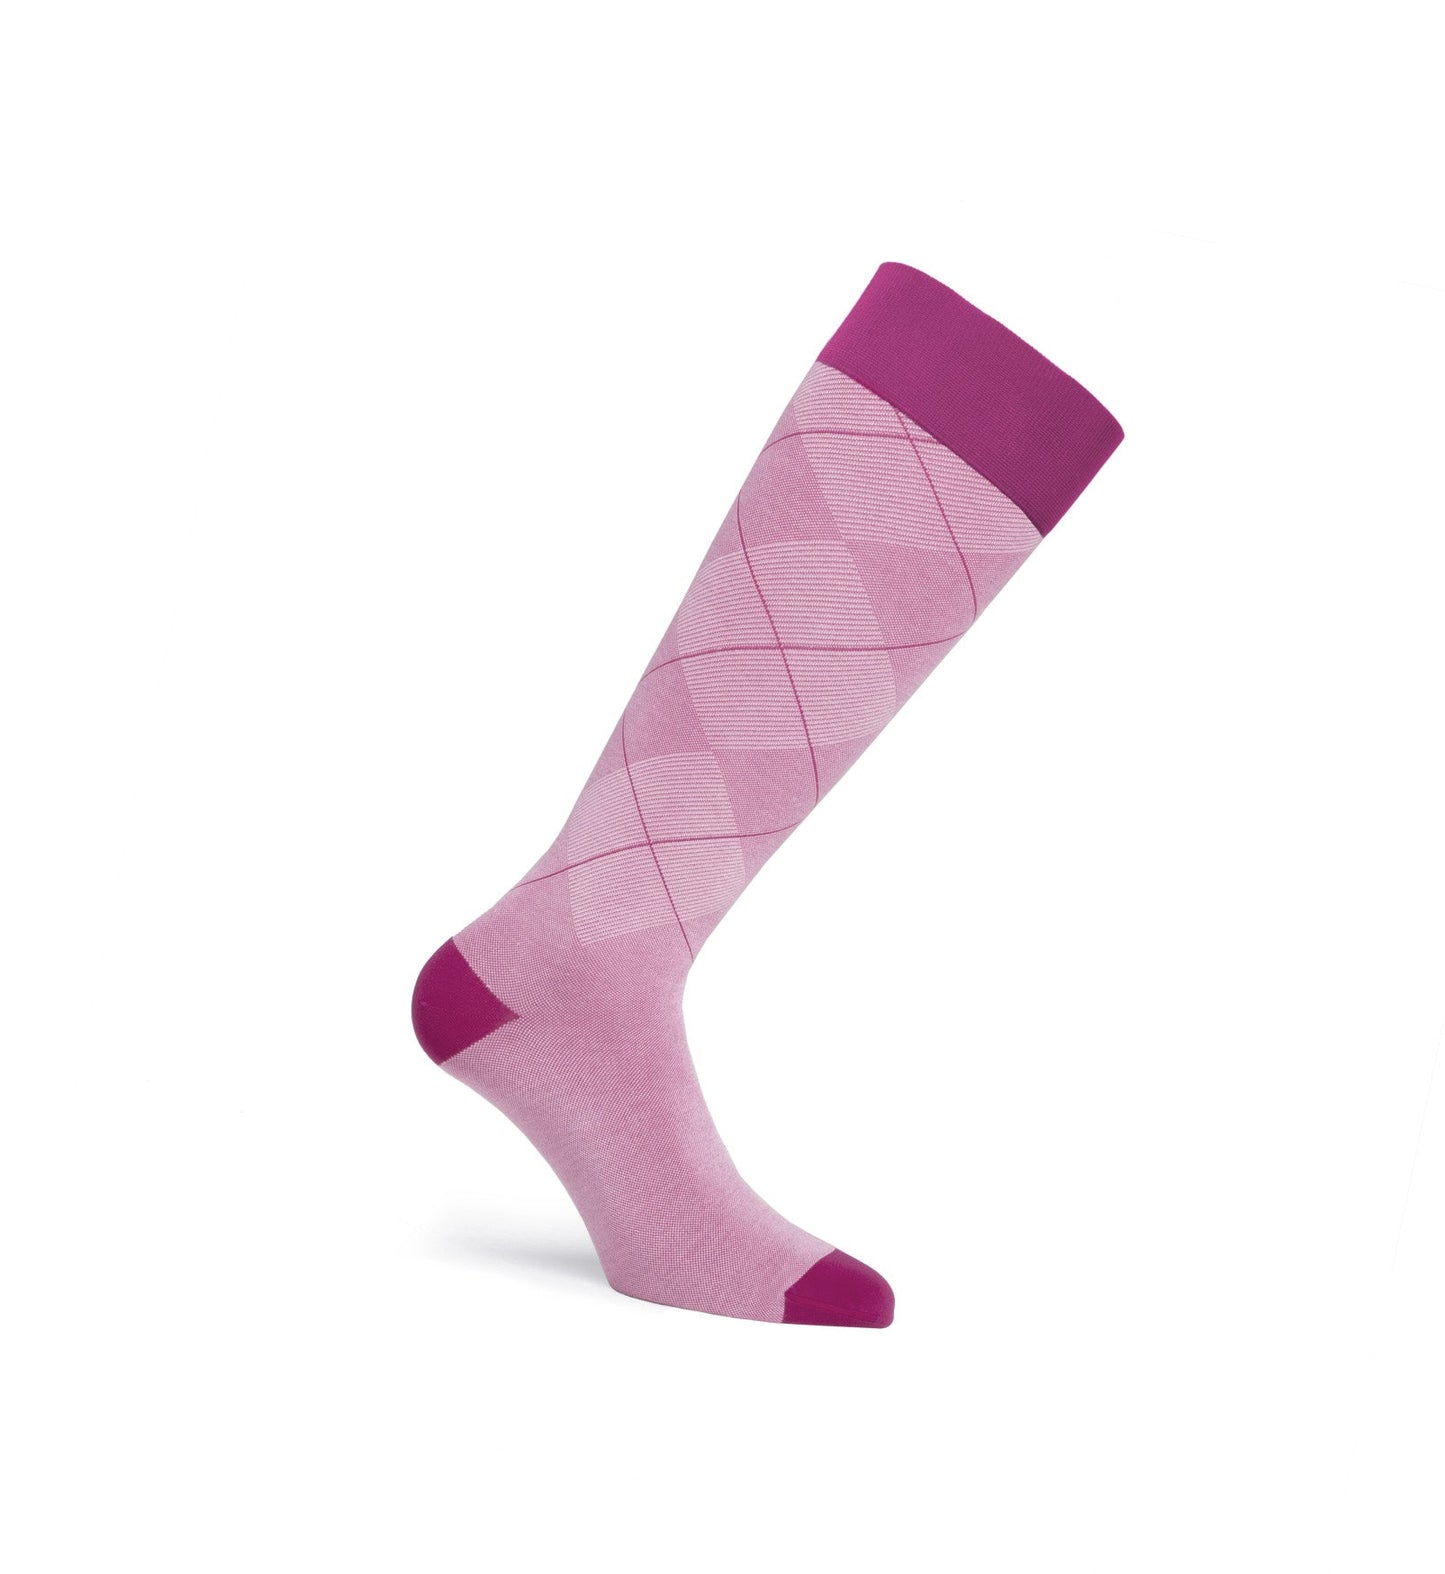 JOBST Casual Pattern Compression Socks 20-30 mmHg, Knee High, Closed Toe, Full Calf Long Length